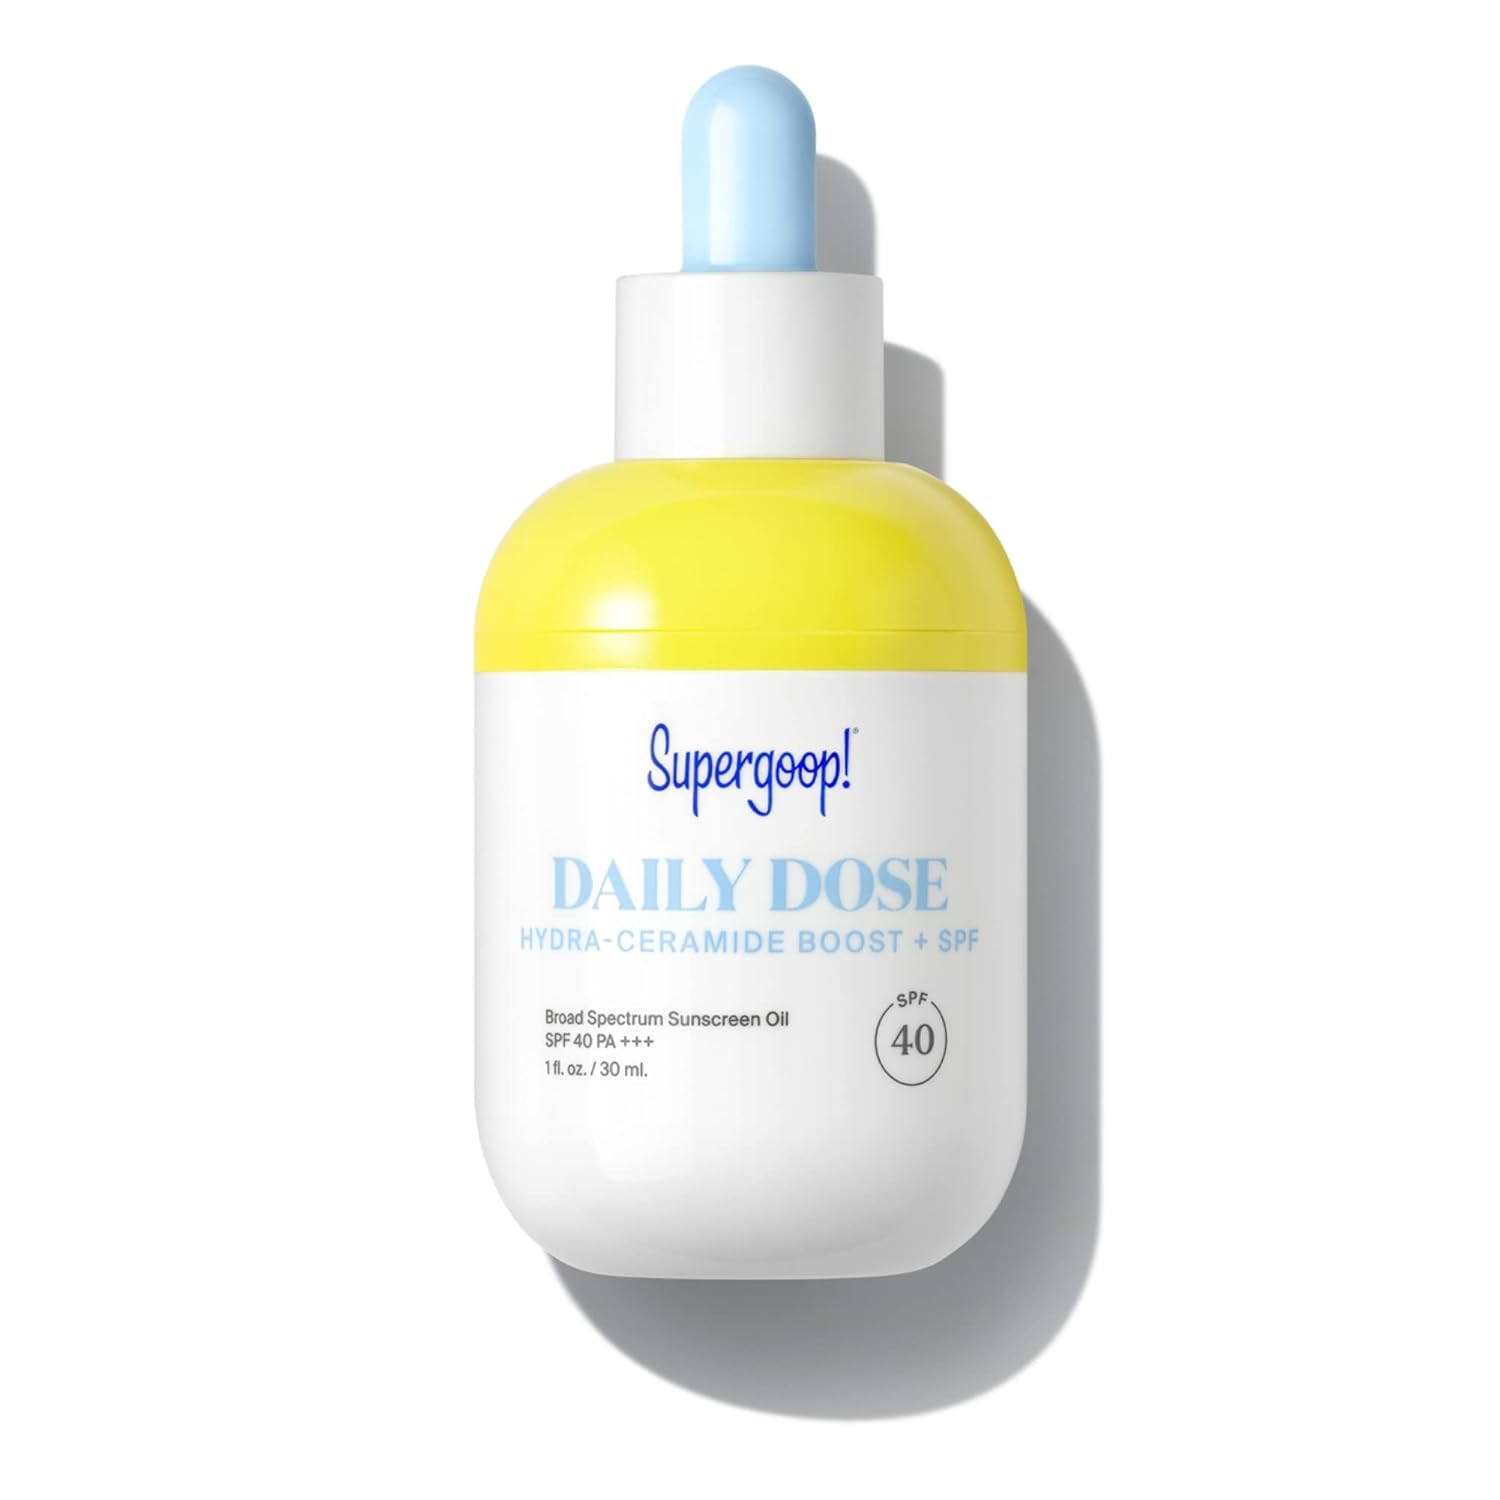 Supergoop! Daily Dose Hydra-Ceramide Boost + SPF 40 Face Oil 1 / 30 mL